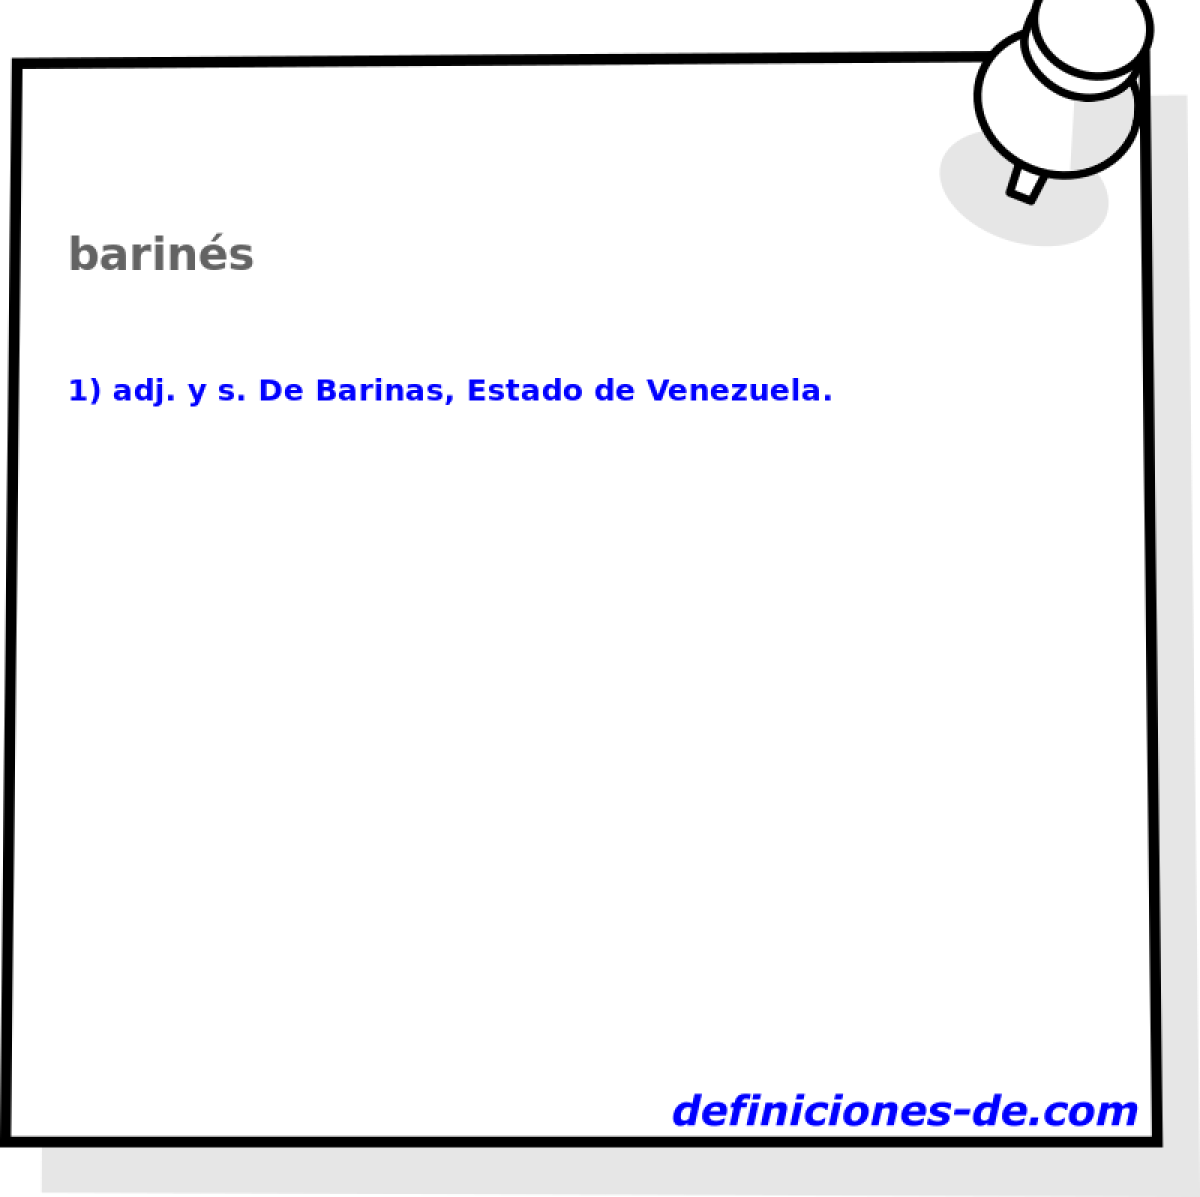 barins 